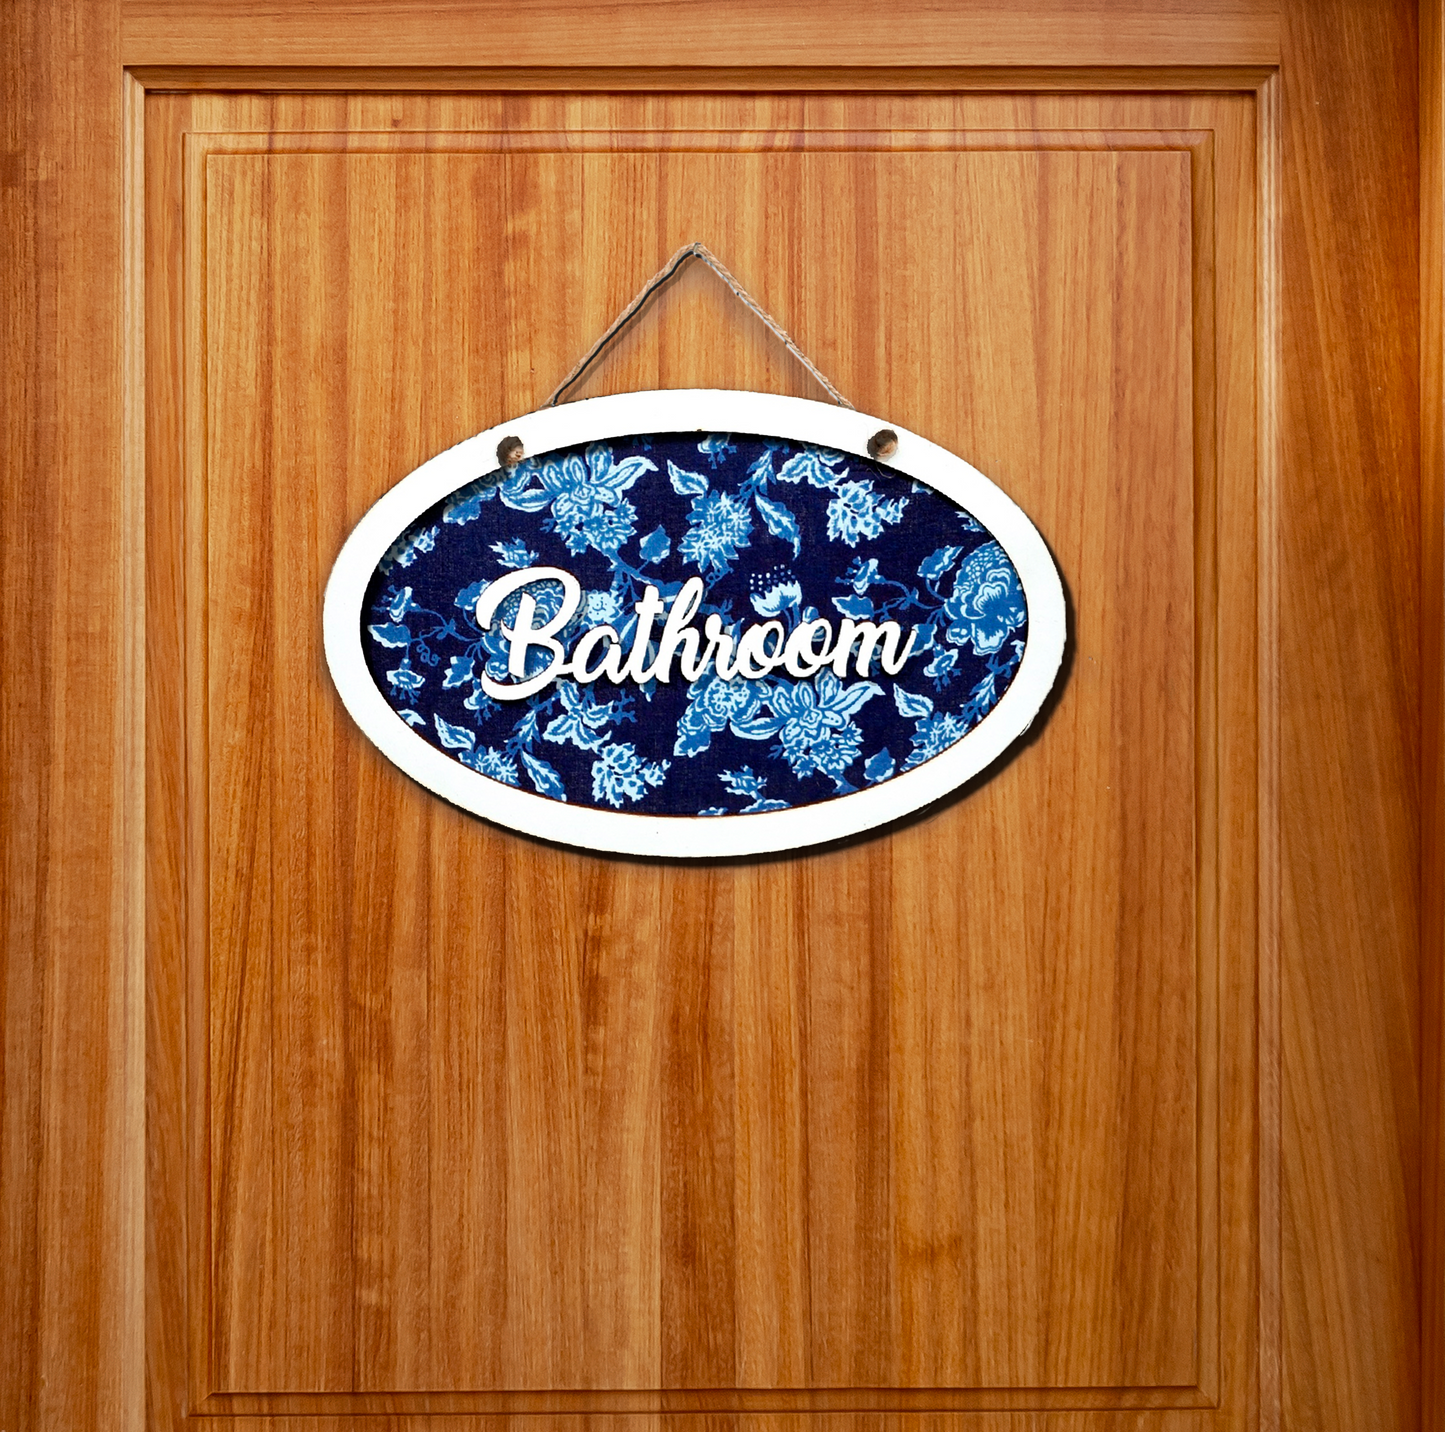 Bathroom Wooden Oval Shape Hanging Sign Board